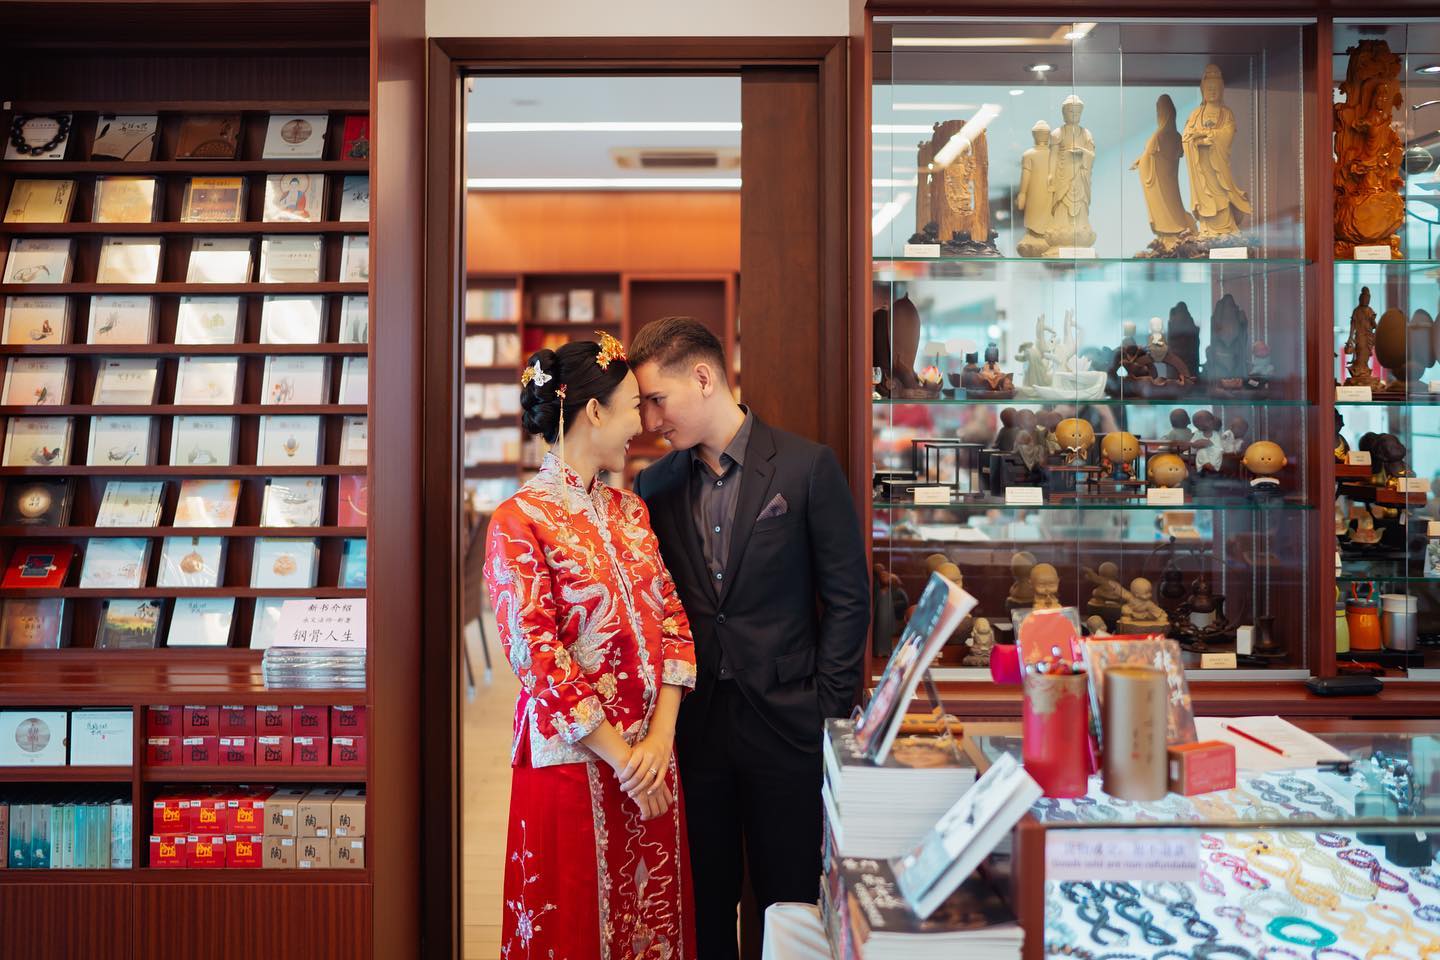 traditional chinese wedding dress